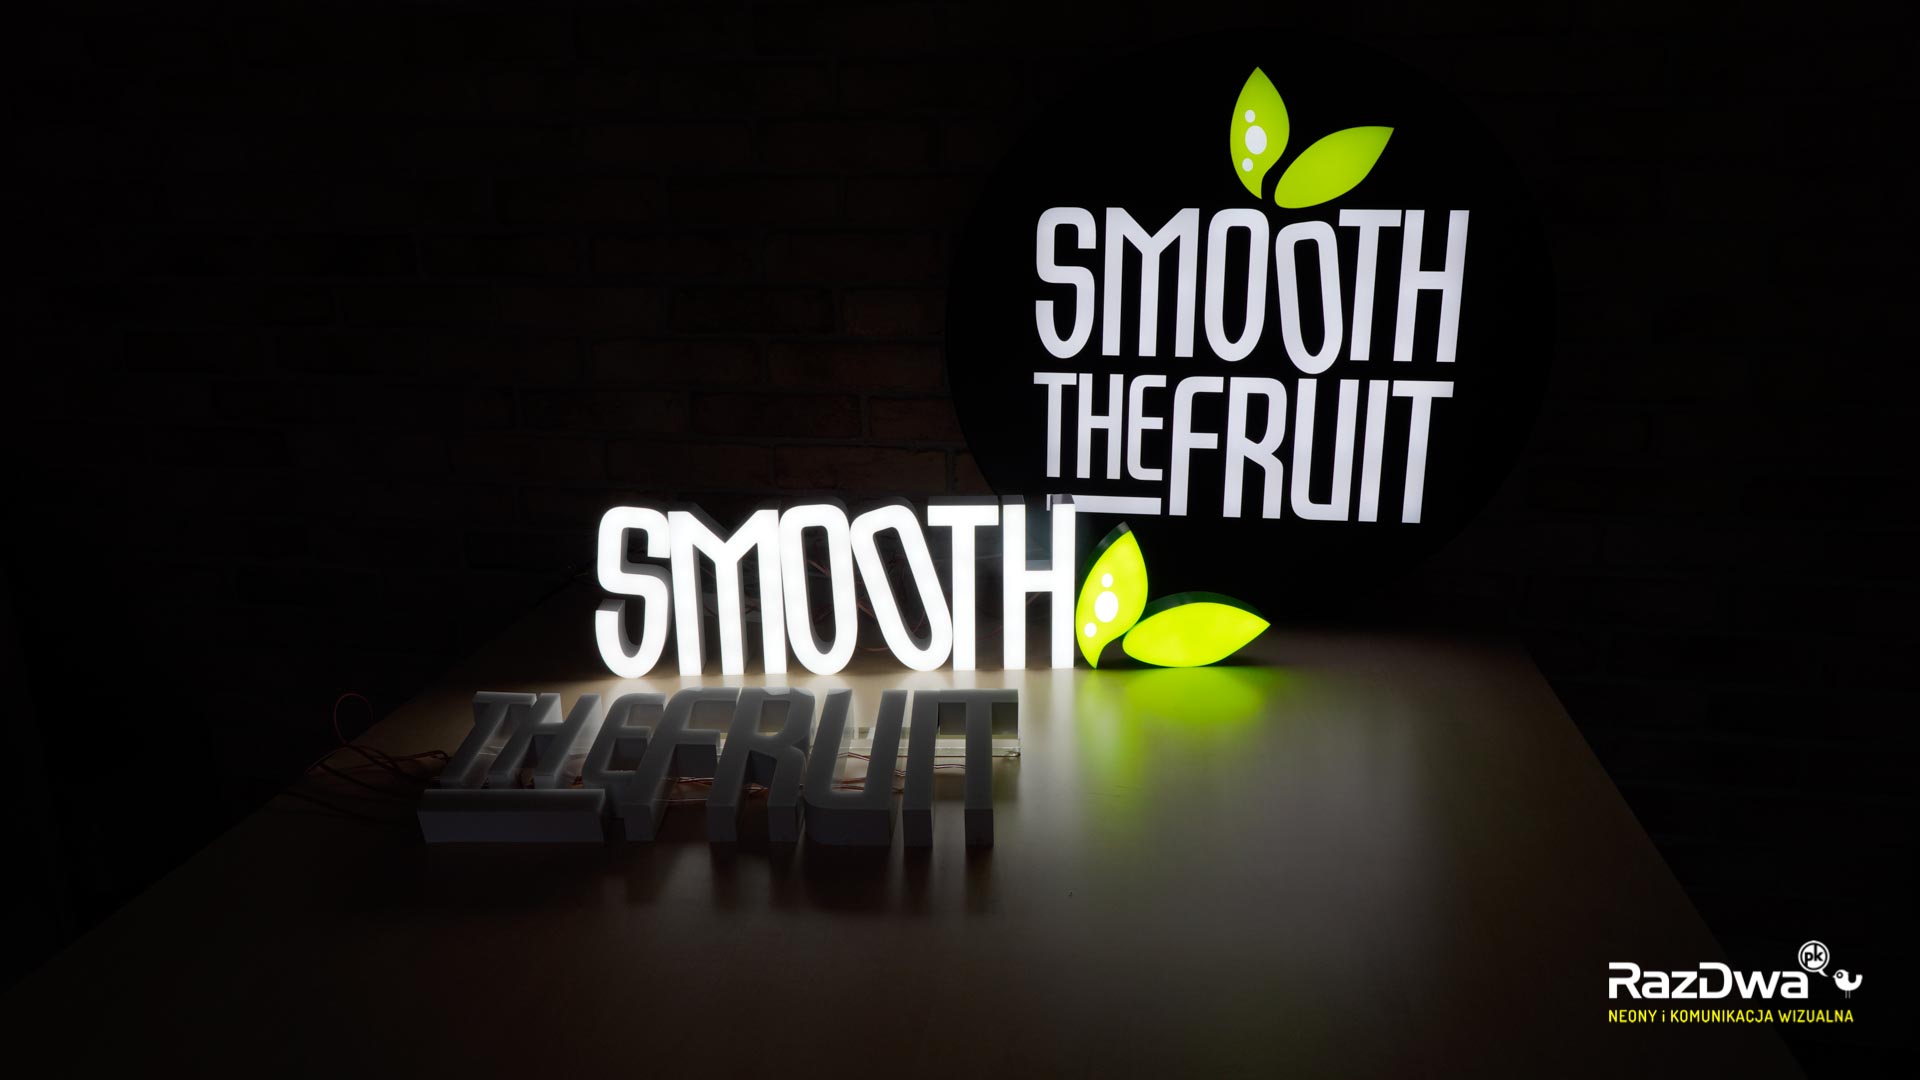 smooth-the-fruit-oznakowanie-litery-led-3d-09